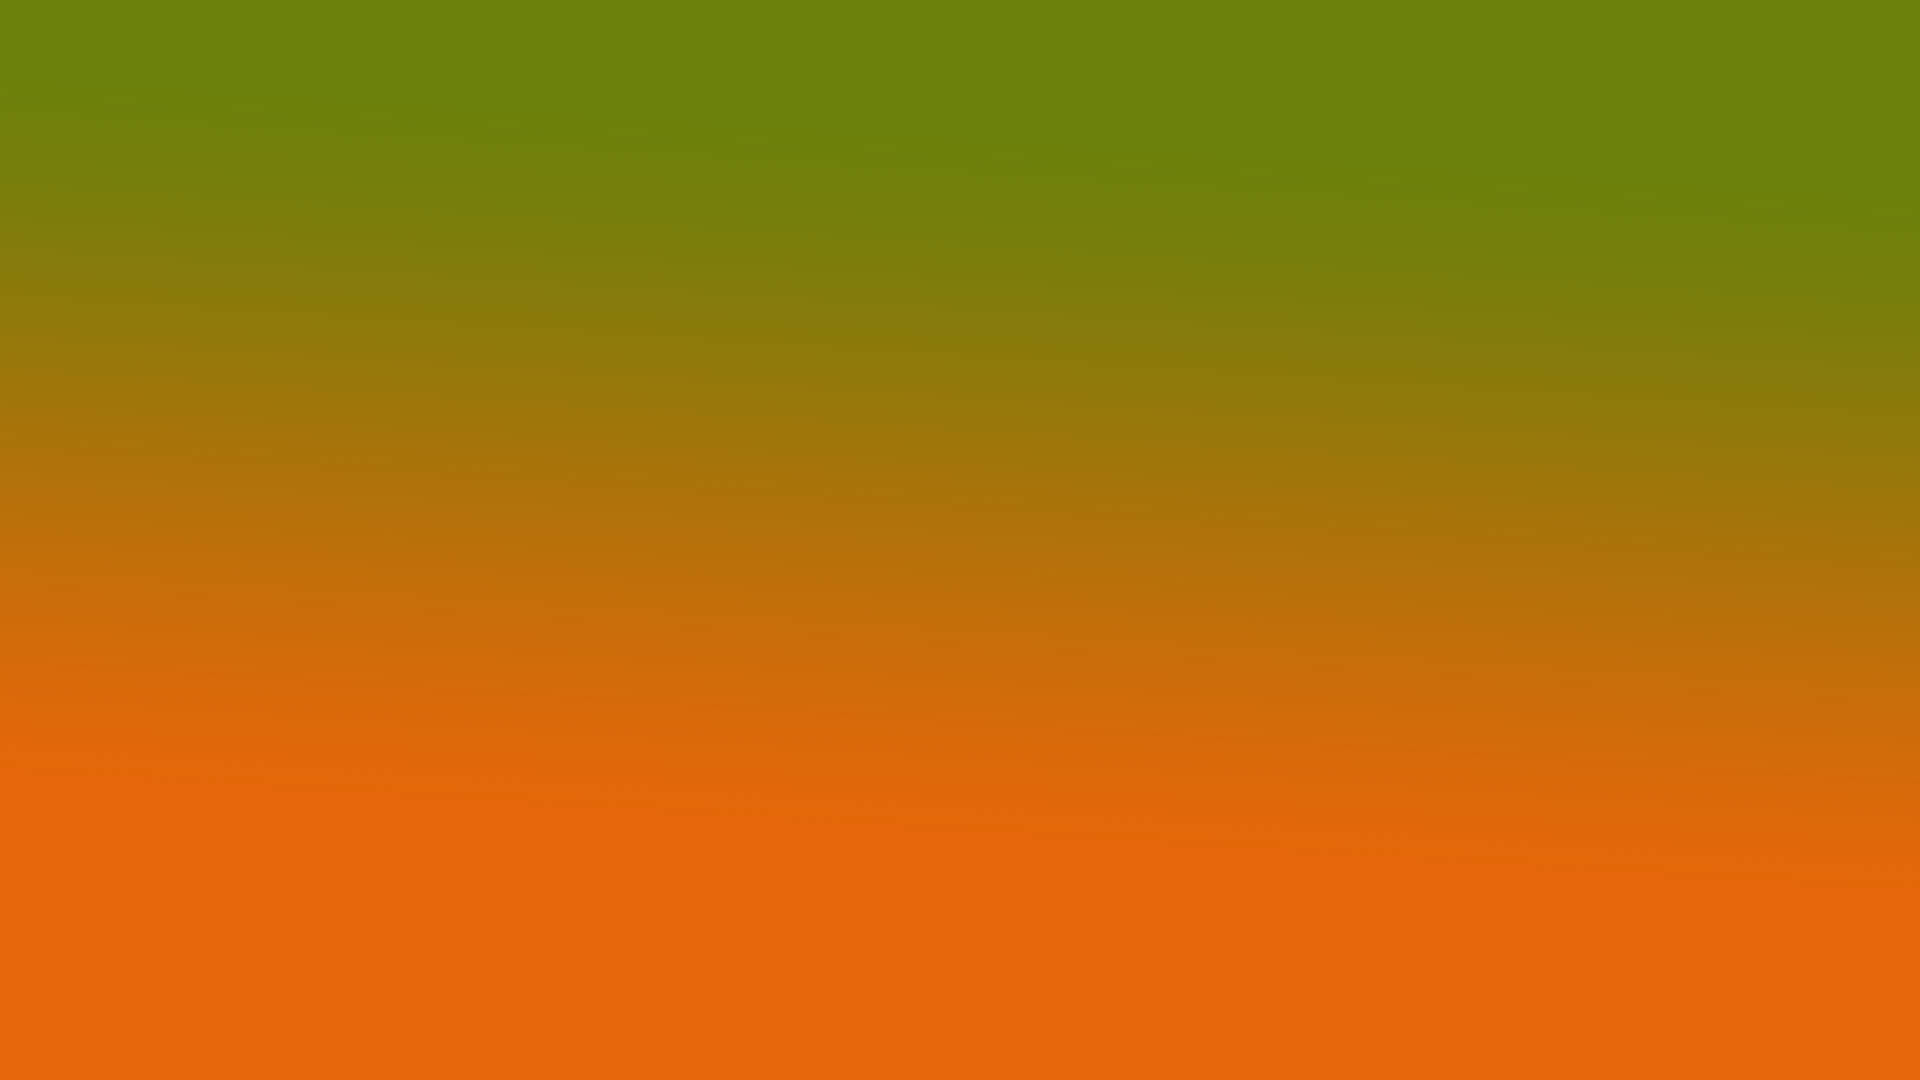 Solid Orange And Green Desktop Wallpaper